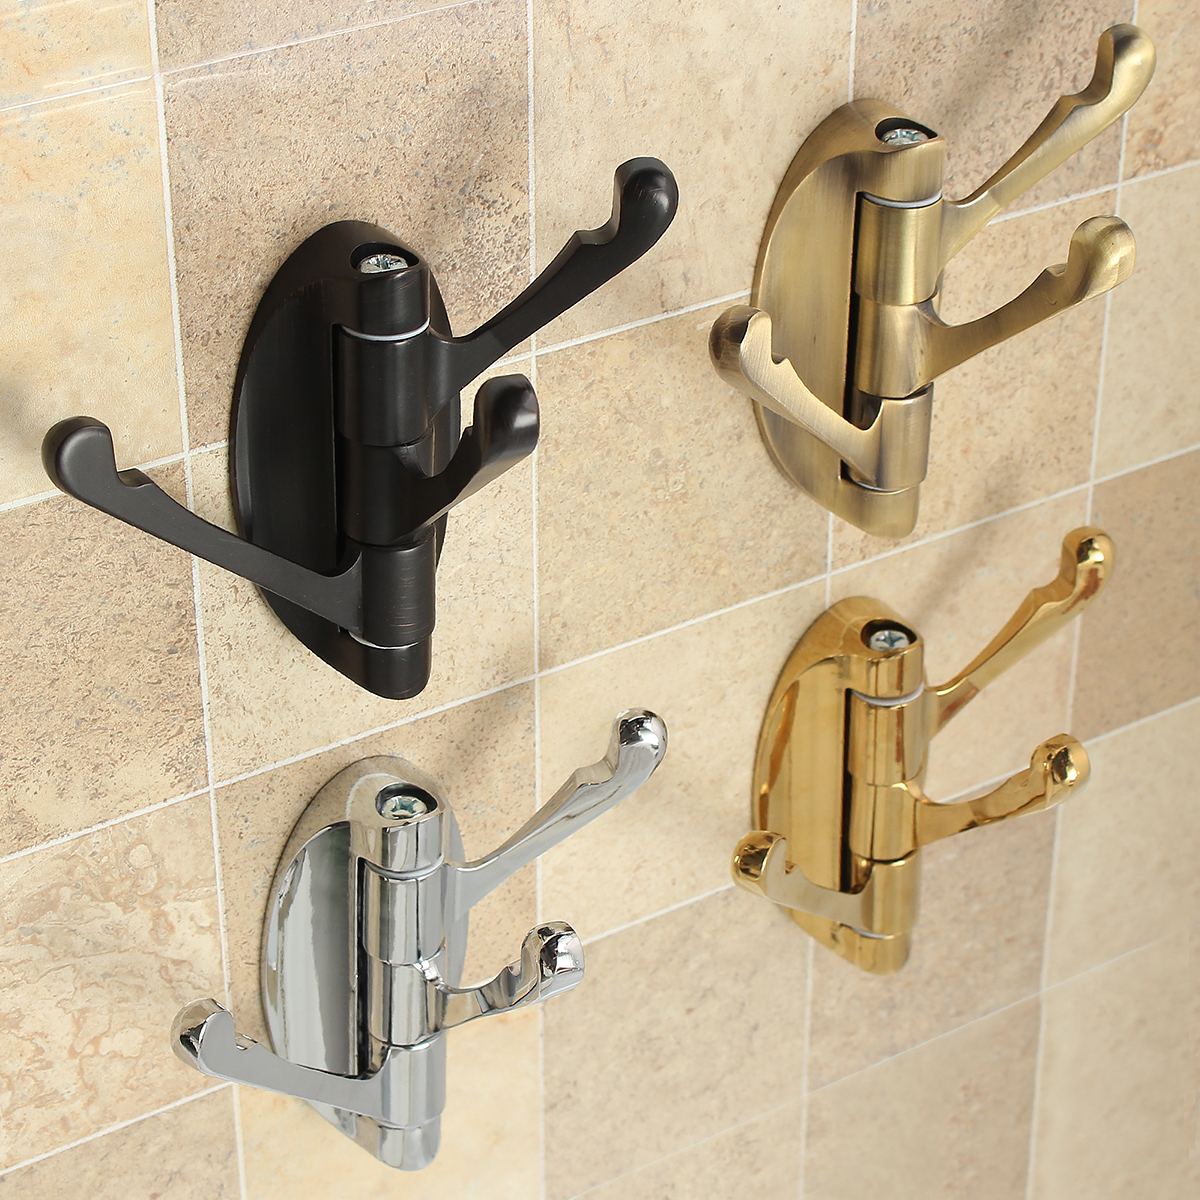 180deg-Revolve-Bathroom-Robe-Hook-Holder-Wall-Mounted-Adjustable-3-Hooks-Cloth-Hat-Towel-Hanger-1419817-1